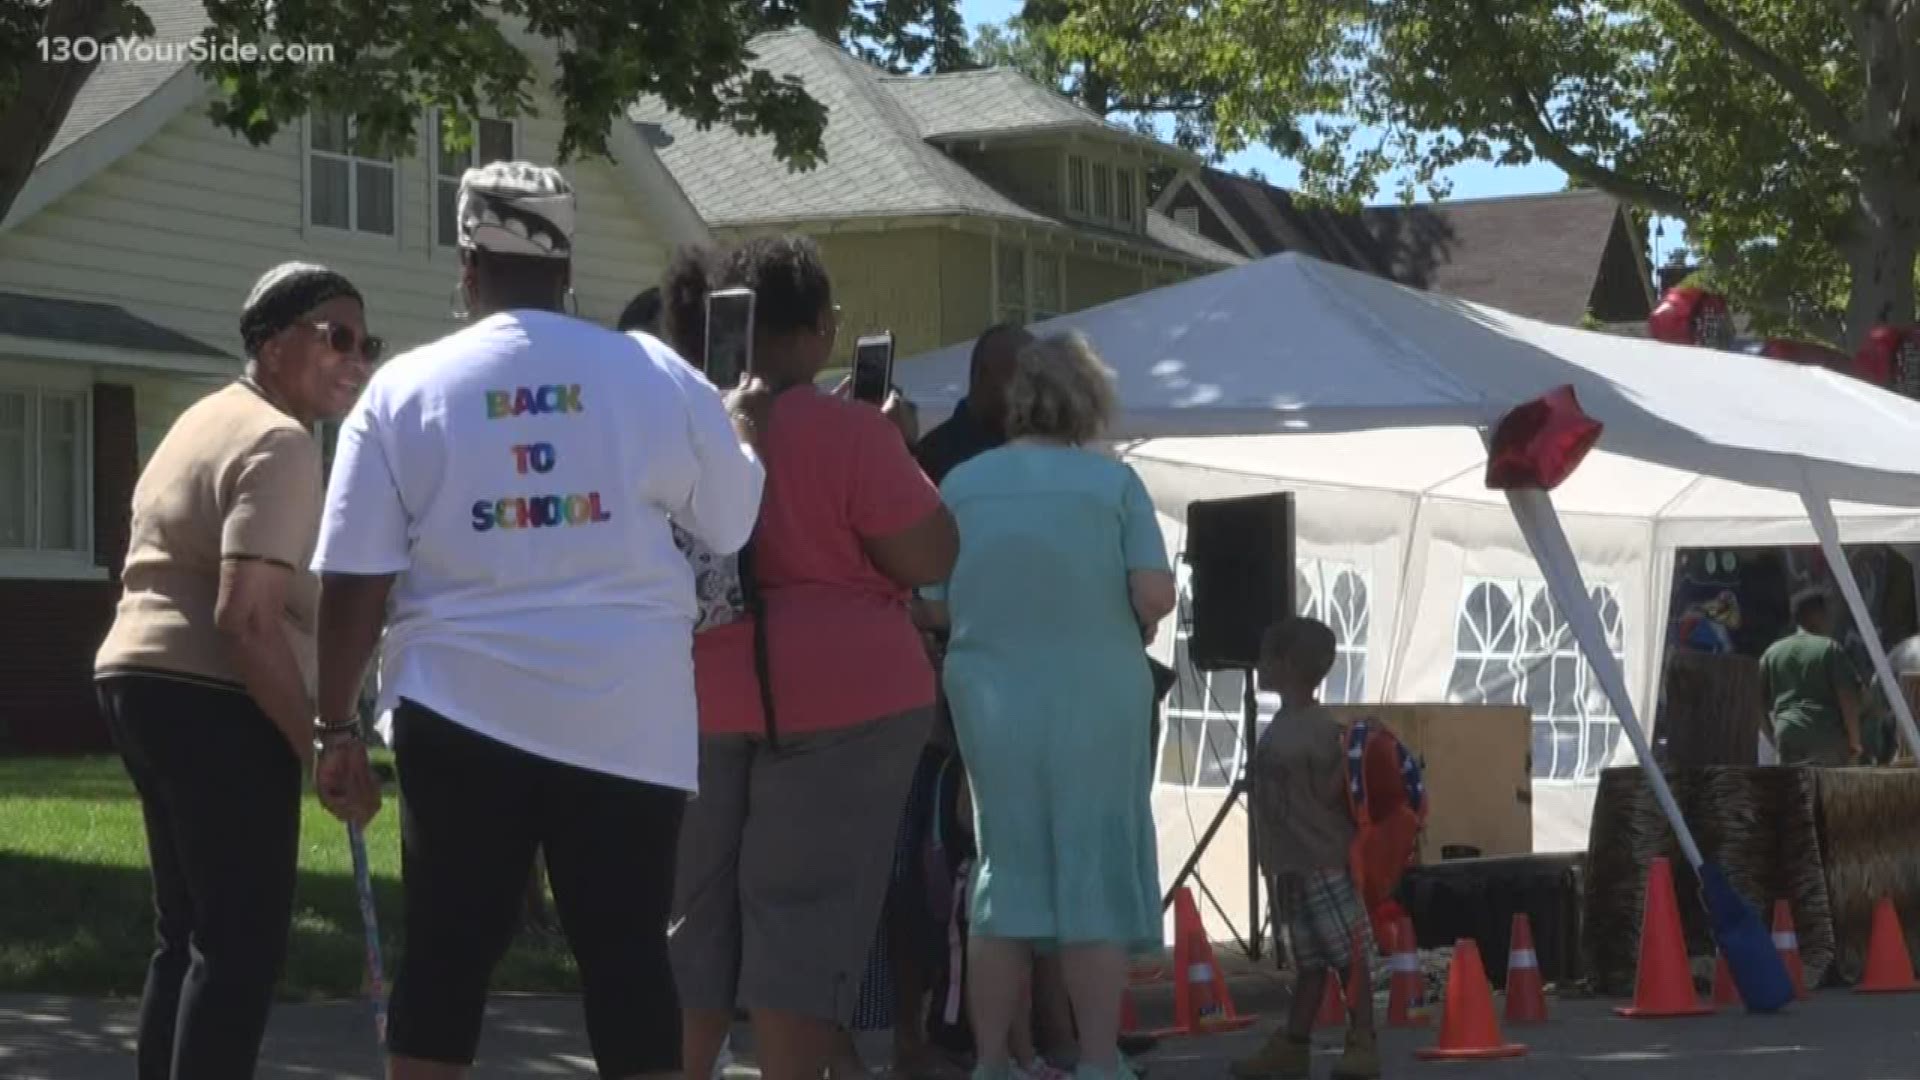 Grand Rapids foster mom hosts back-to-school bash for neighborhood kids